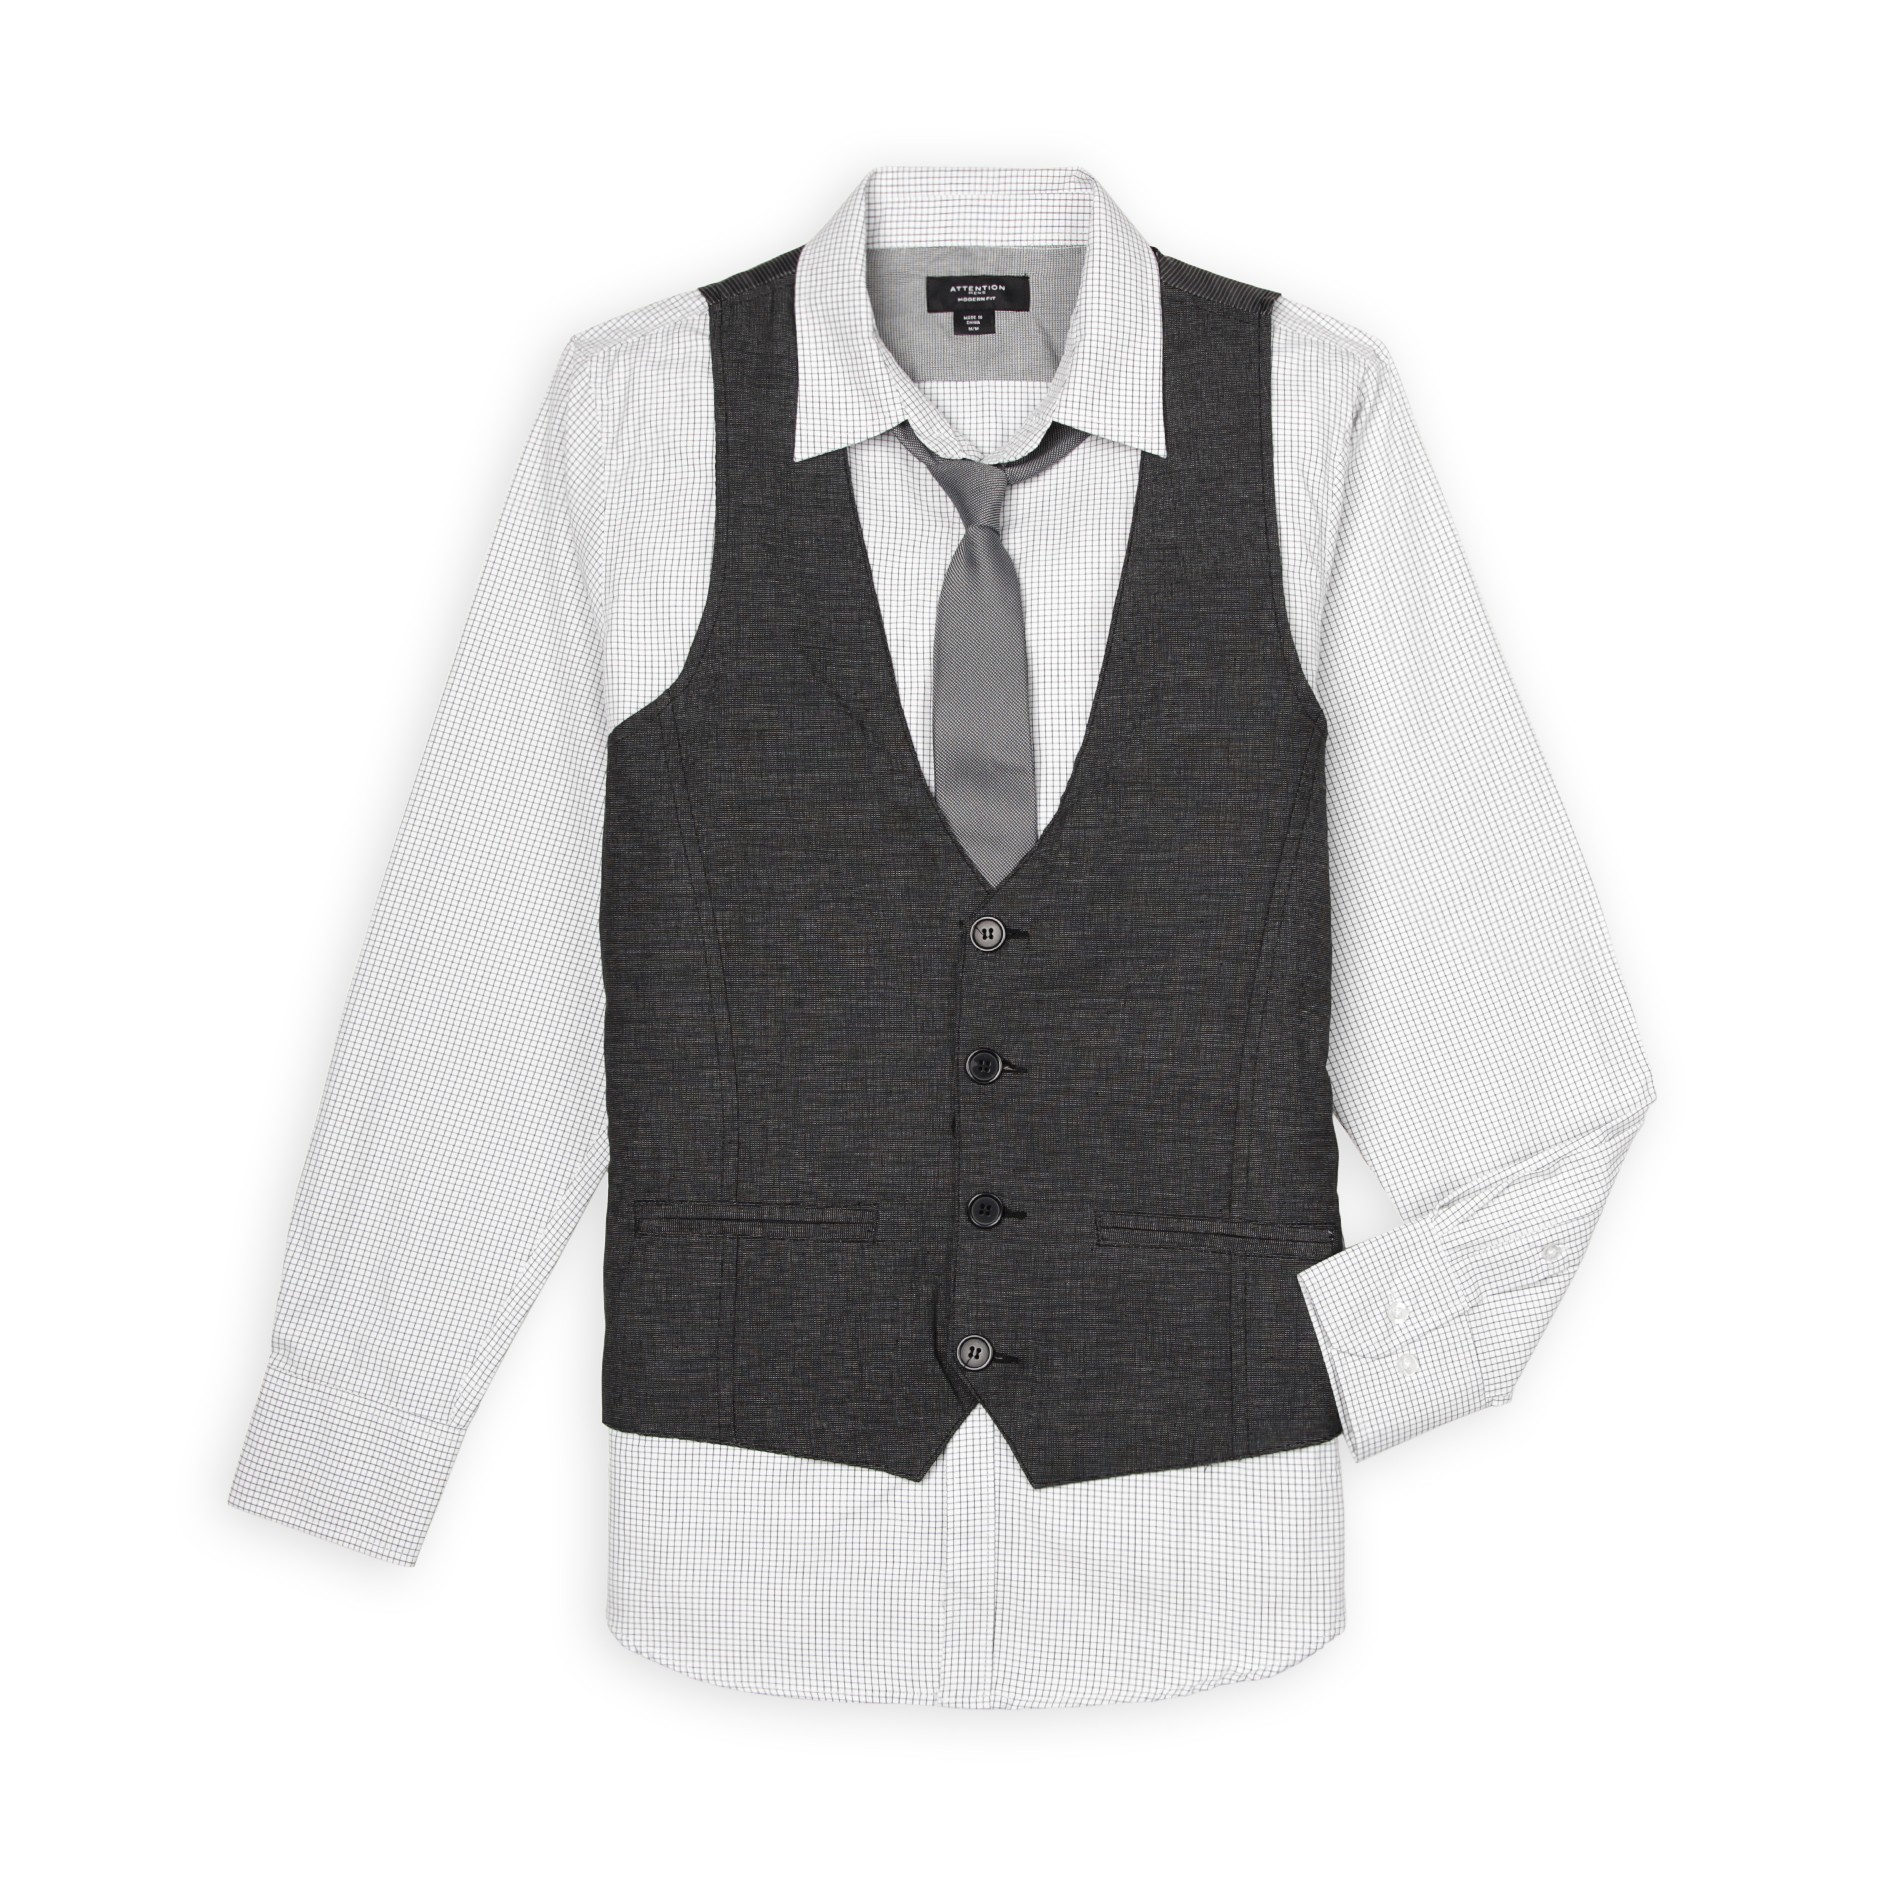 Attention Men's Dress Shirt  Vest  & Necktie